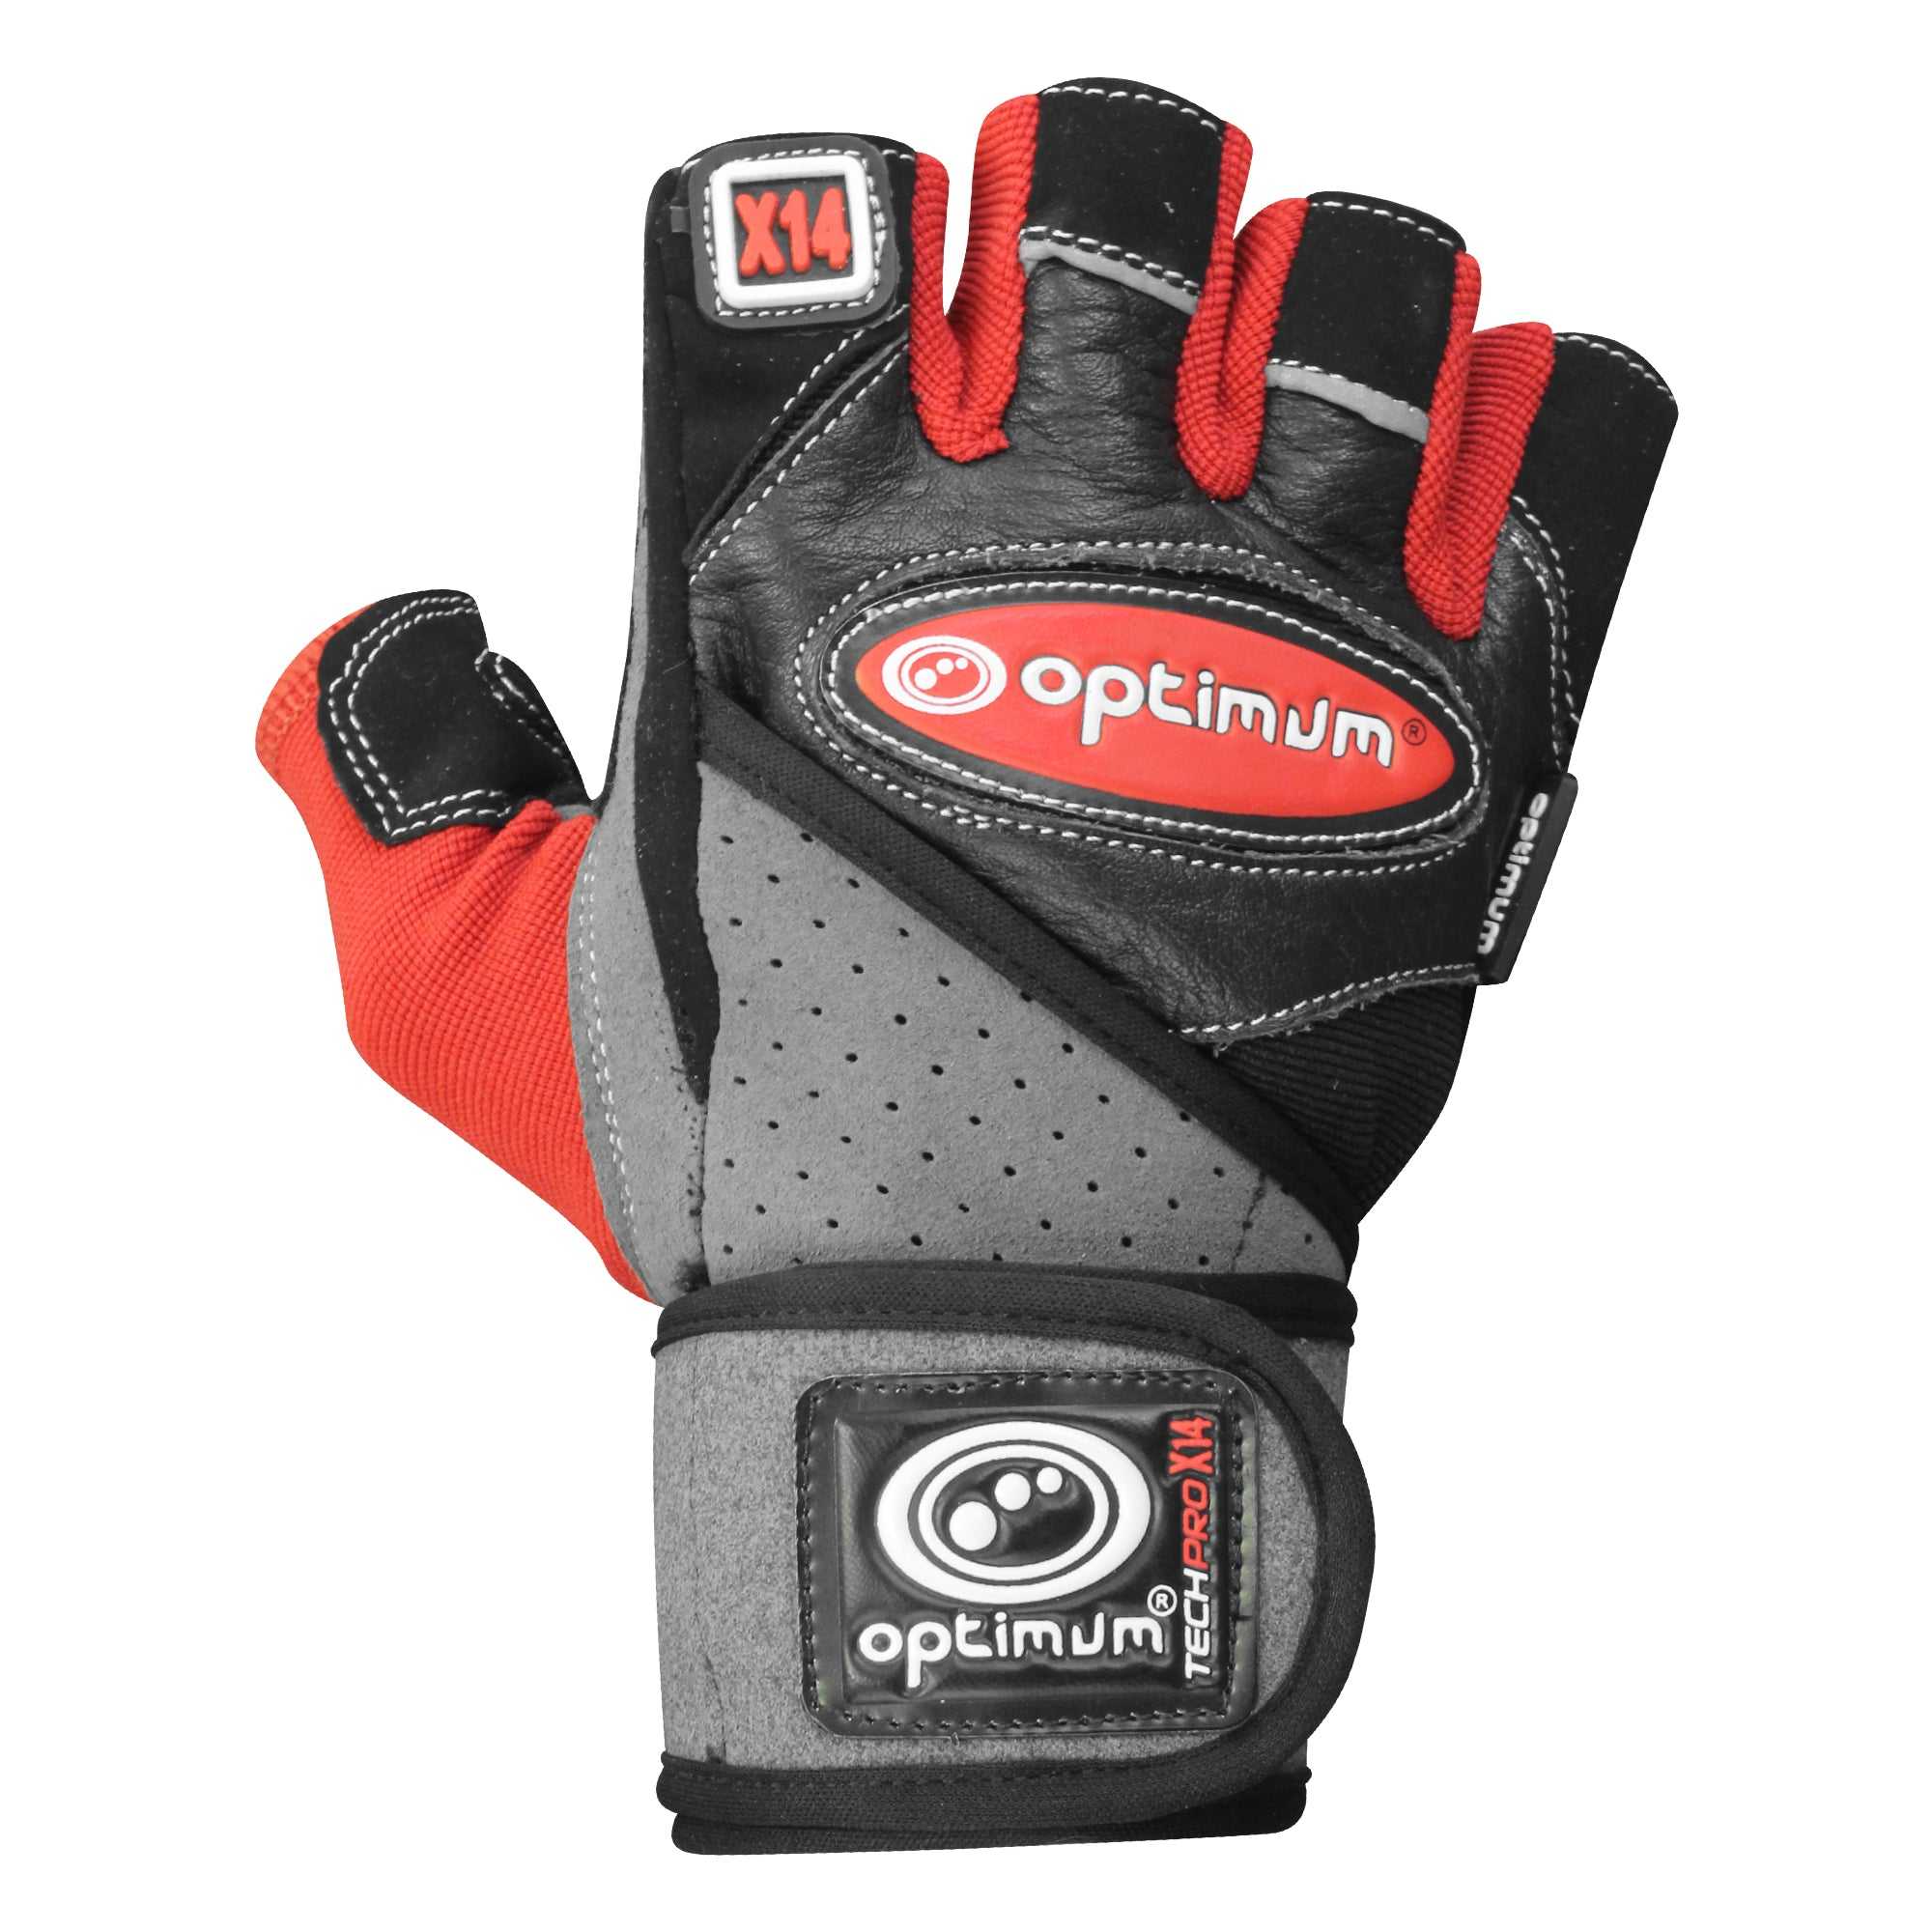 Techpro X14 Weight Lifting Gloves - Optimum